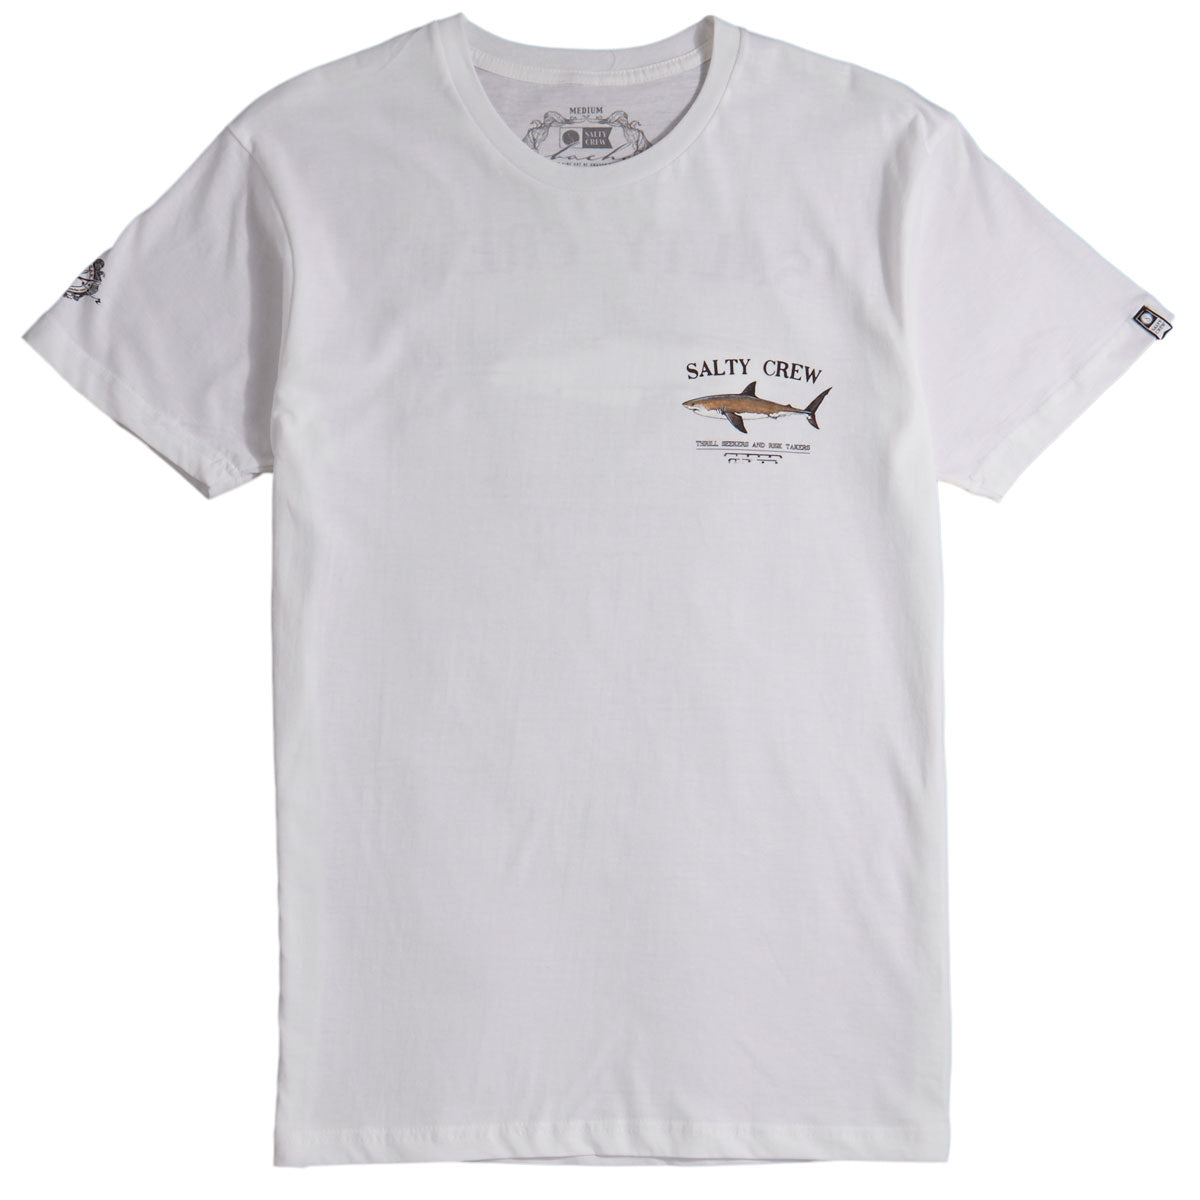 Salty Crew Bruce T-Shirt - White image 1